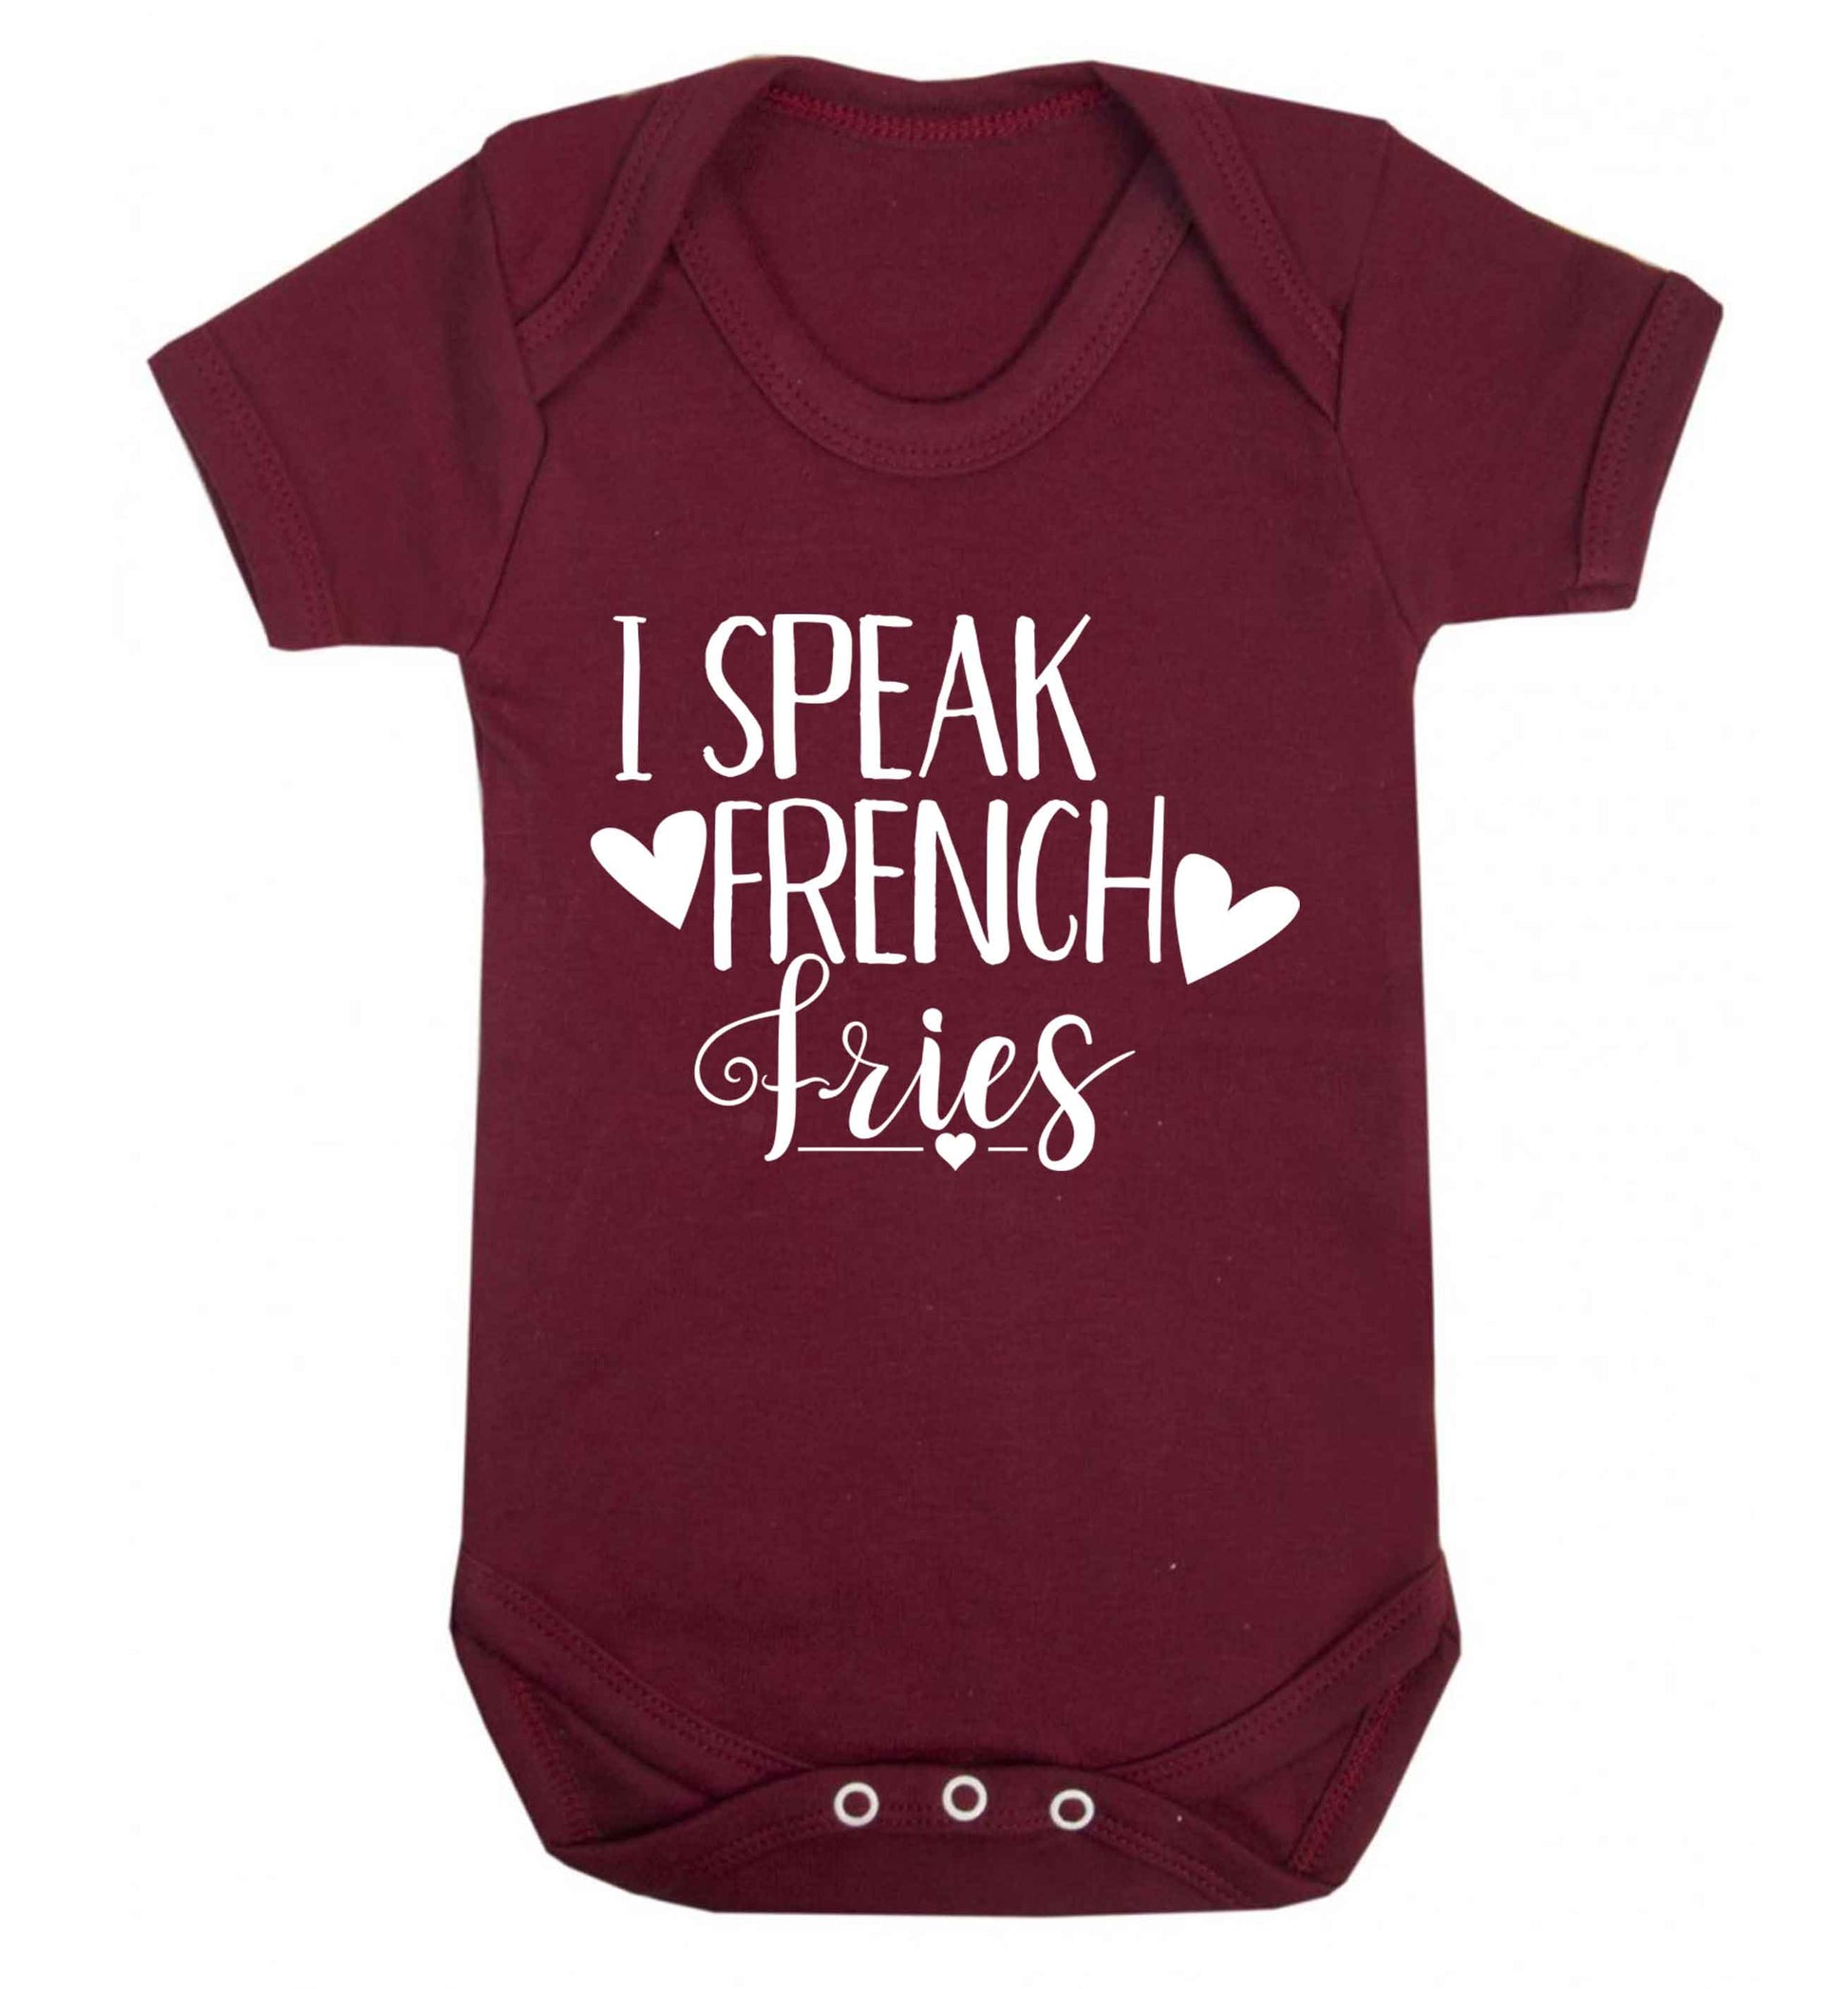 I speak French fries Baby Vest maroon 18-24 months